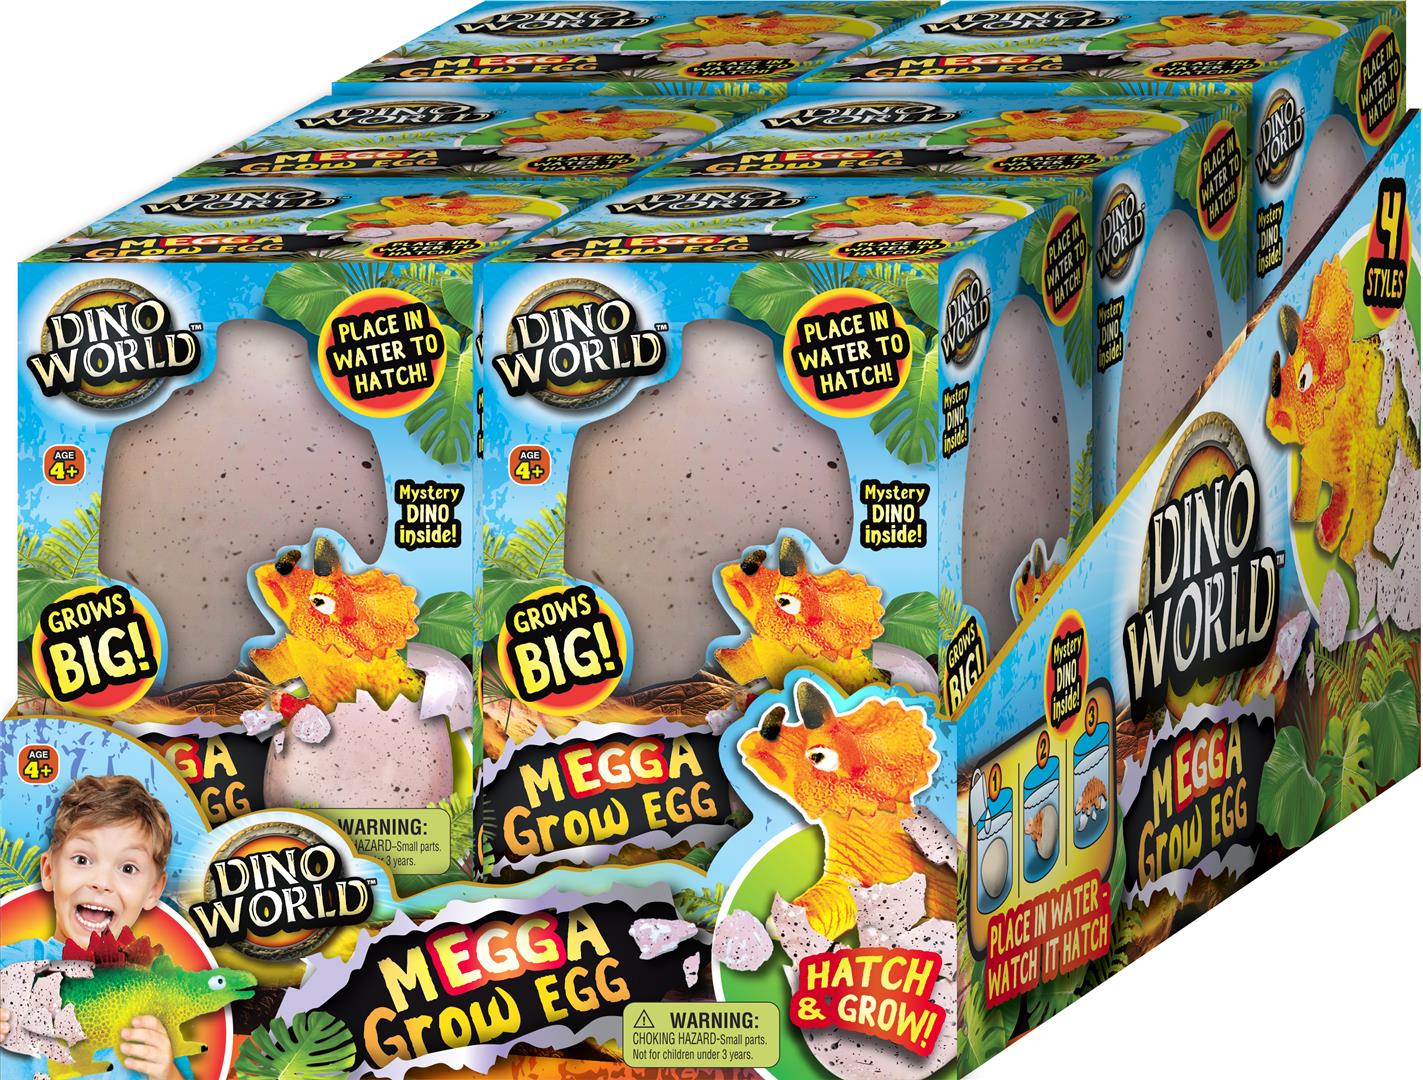 Dino World Megga Grow Egg